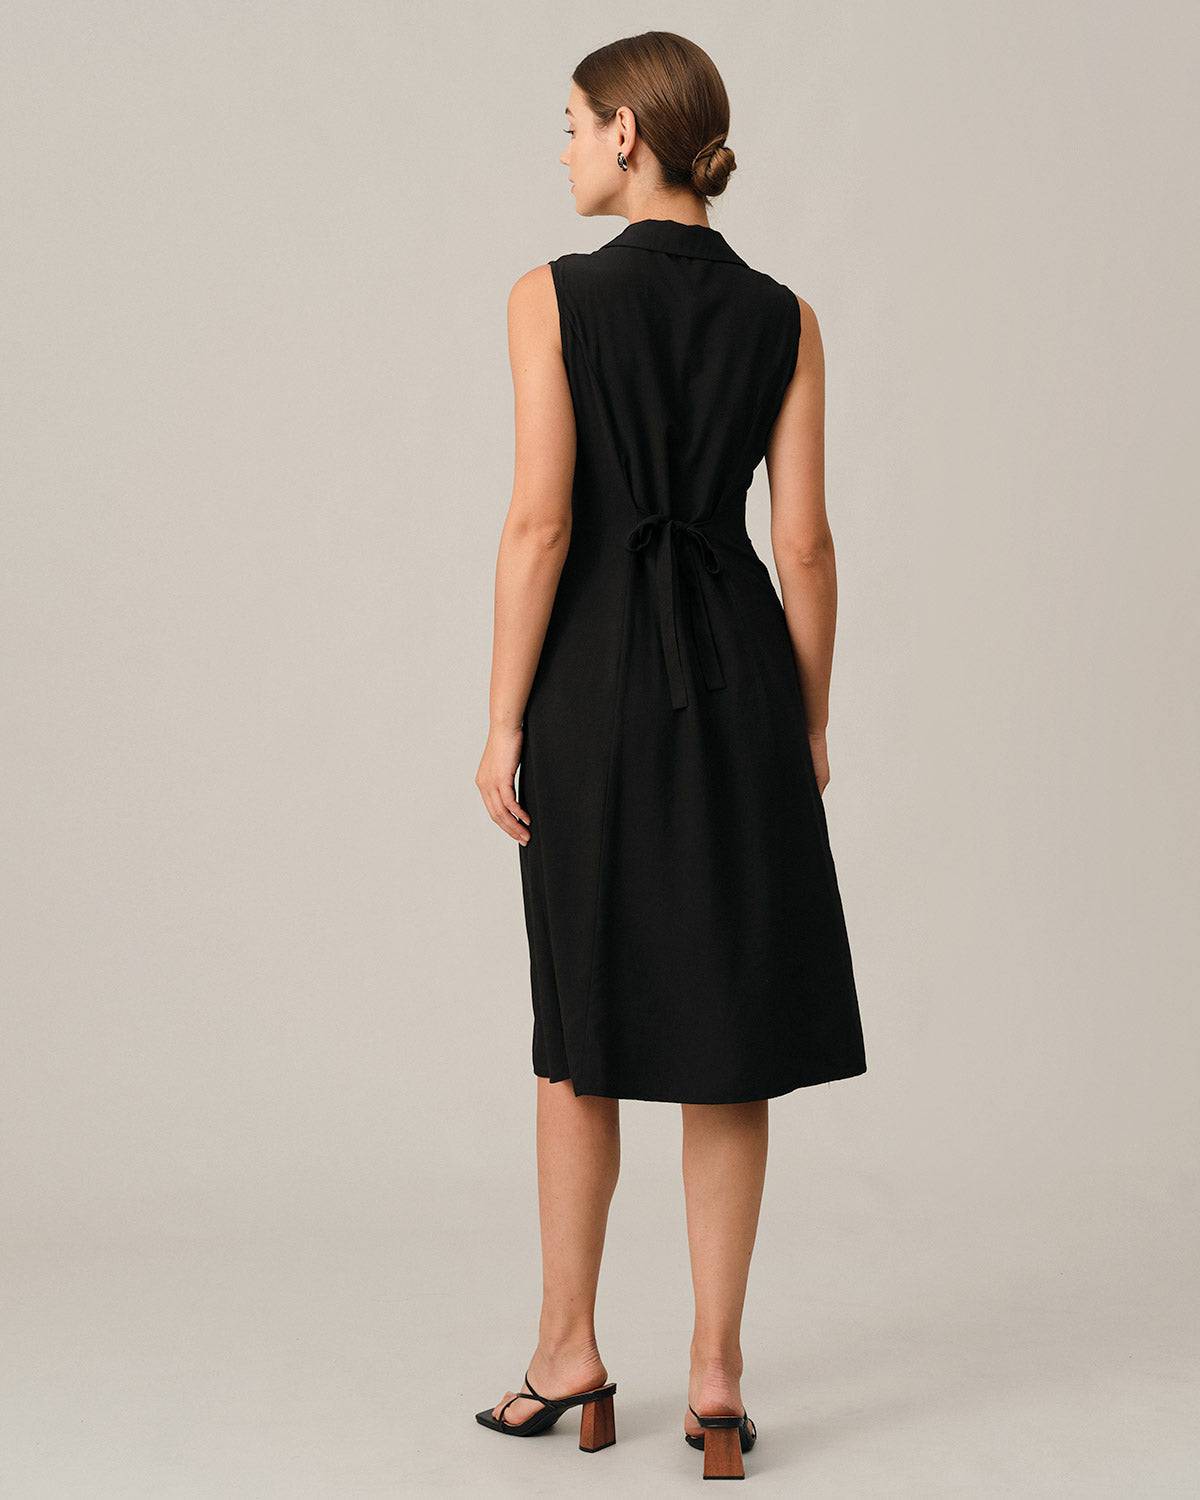 The Black V-Neck Tunic Midi Dress - Black V Neck Sleeveless Solid Midi  Dress - Black - Dresses | RIHOAS | Gemusterte Kleider